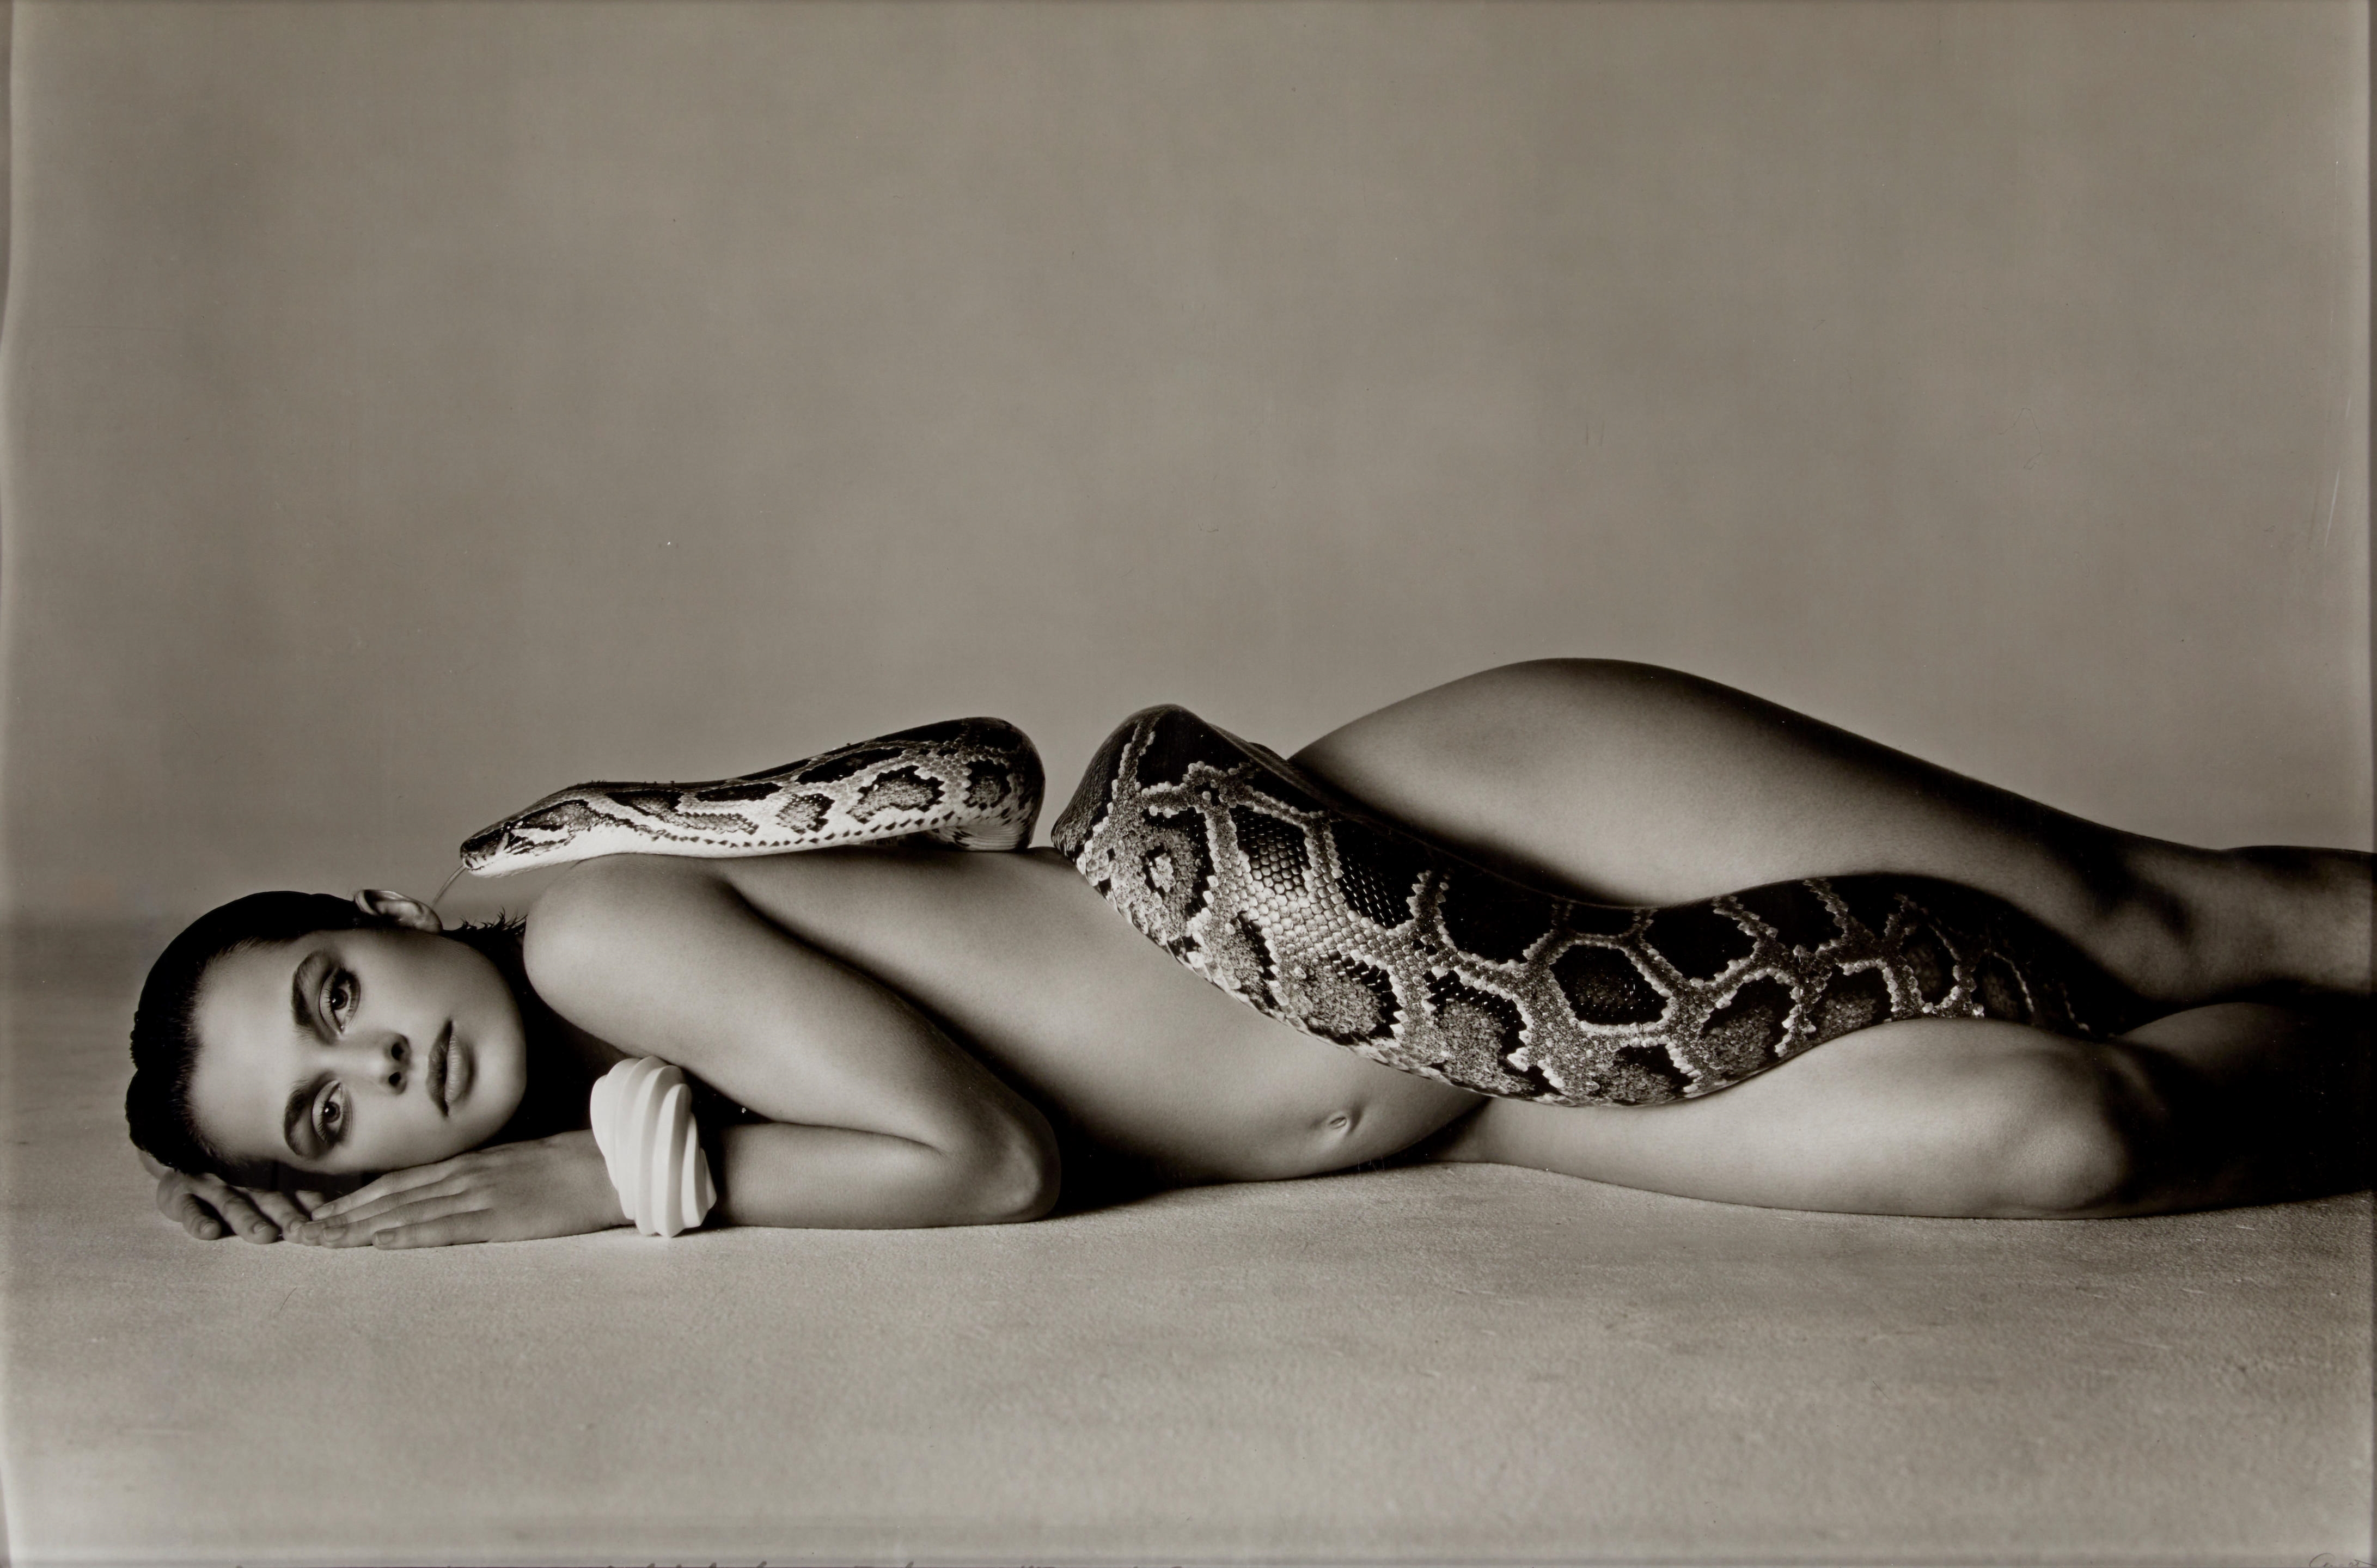 Nastassja Kinski and the Serpent, Los Angeles, California - Richard Avedon